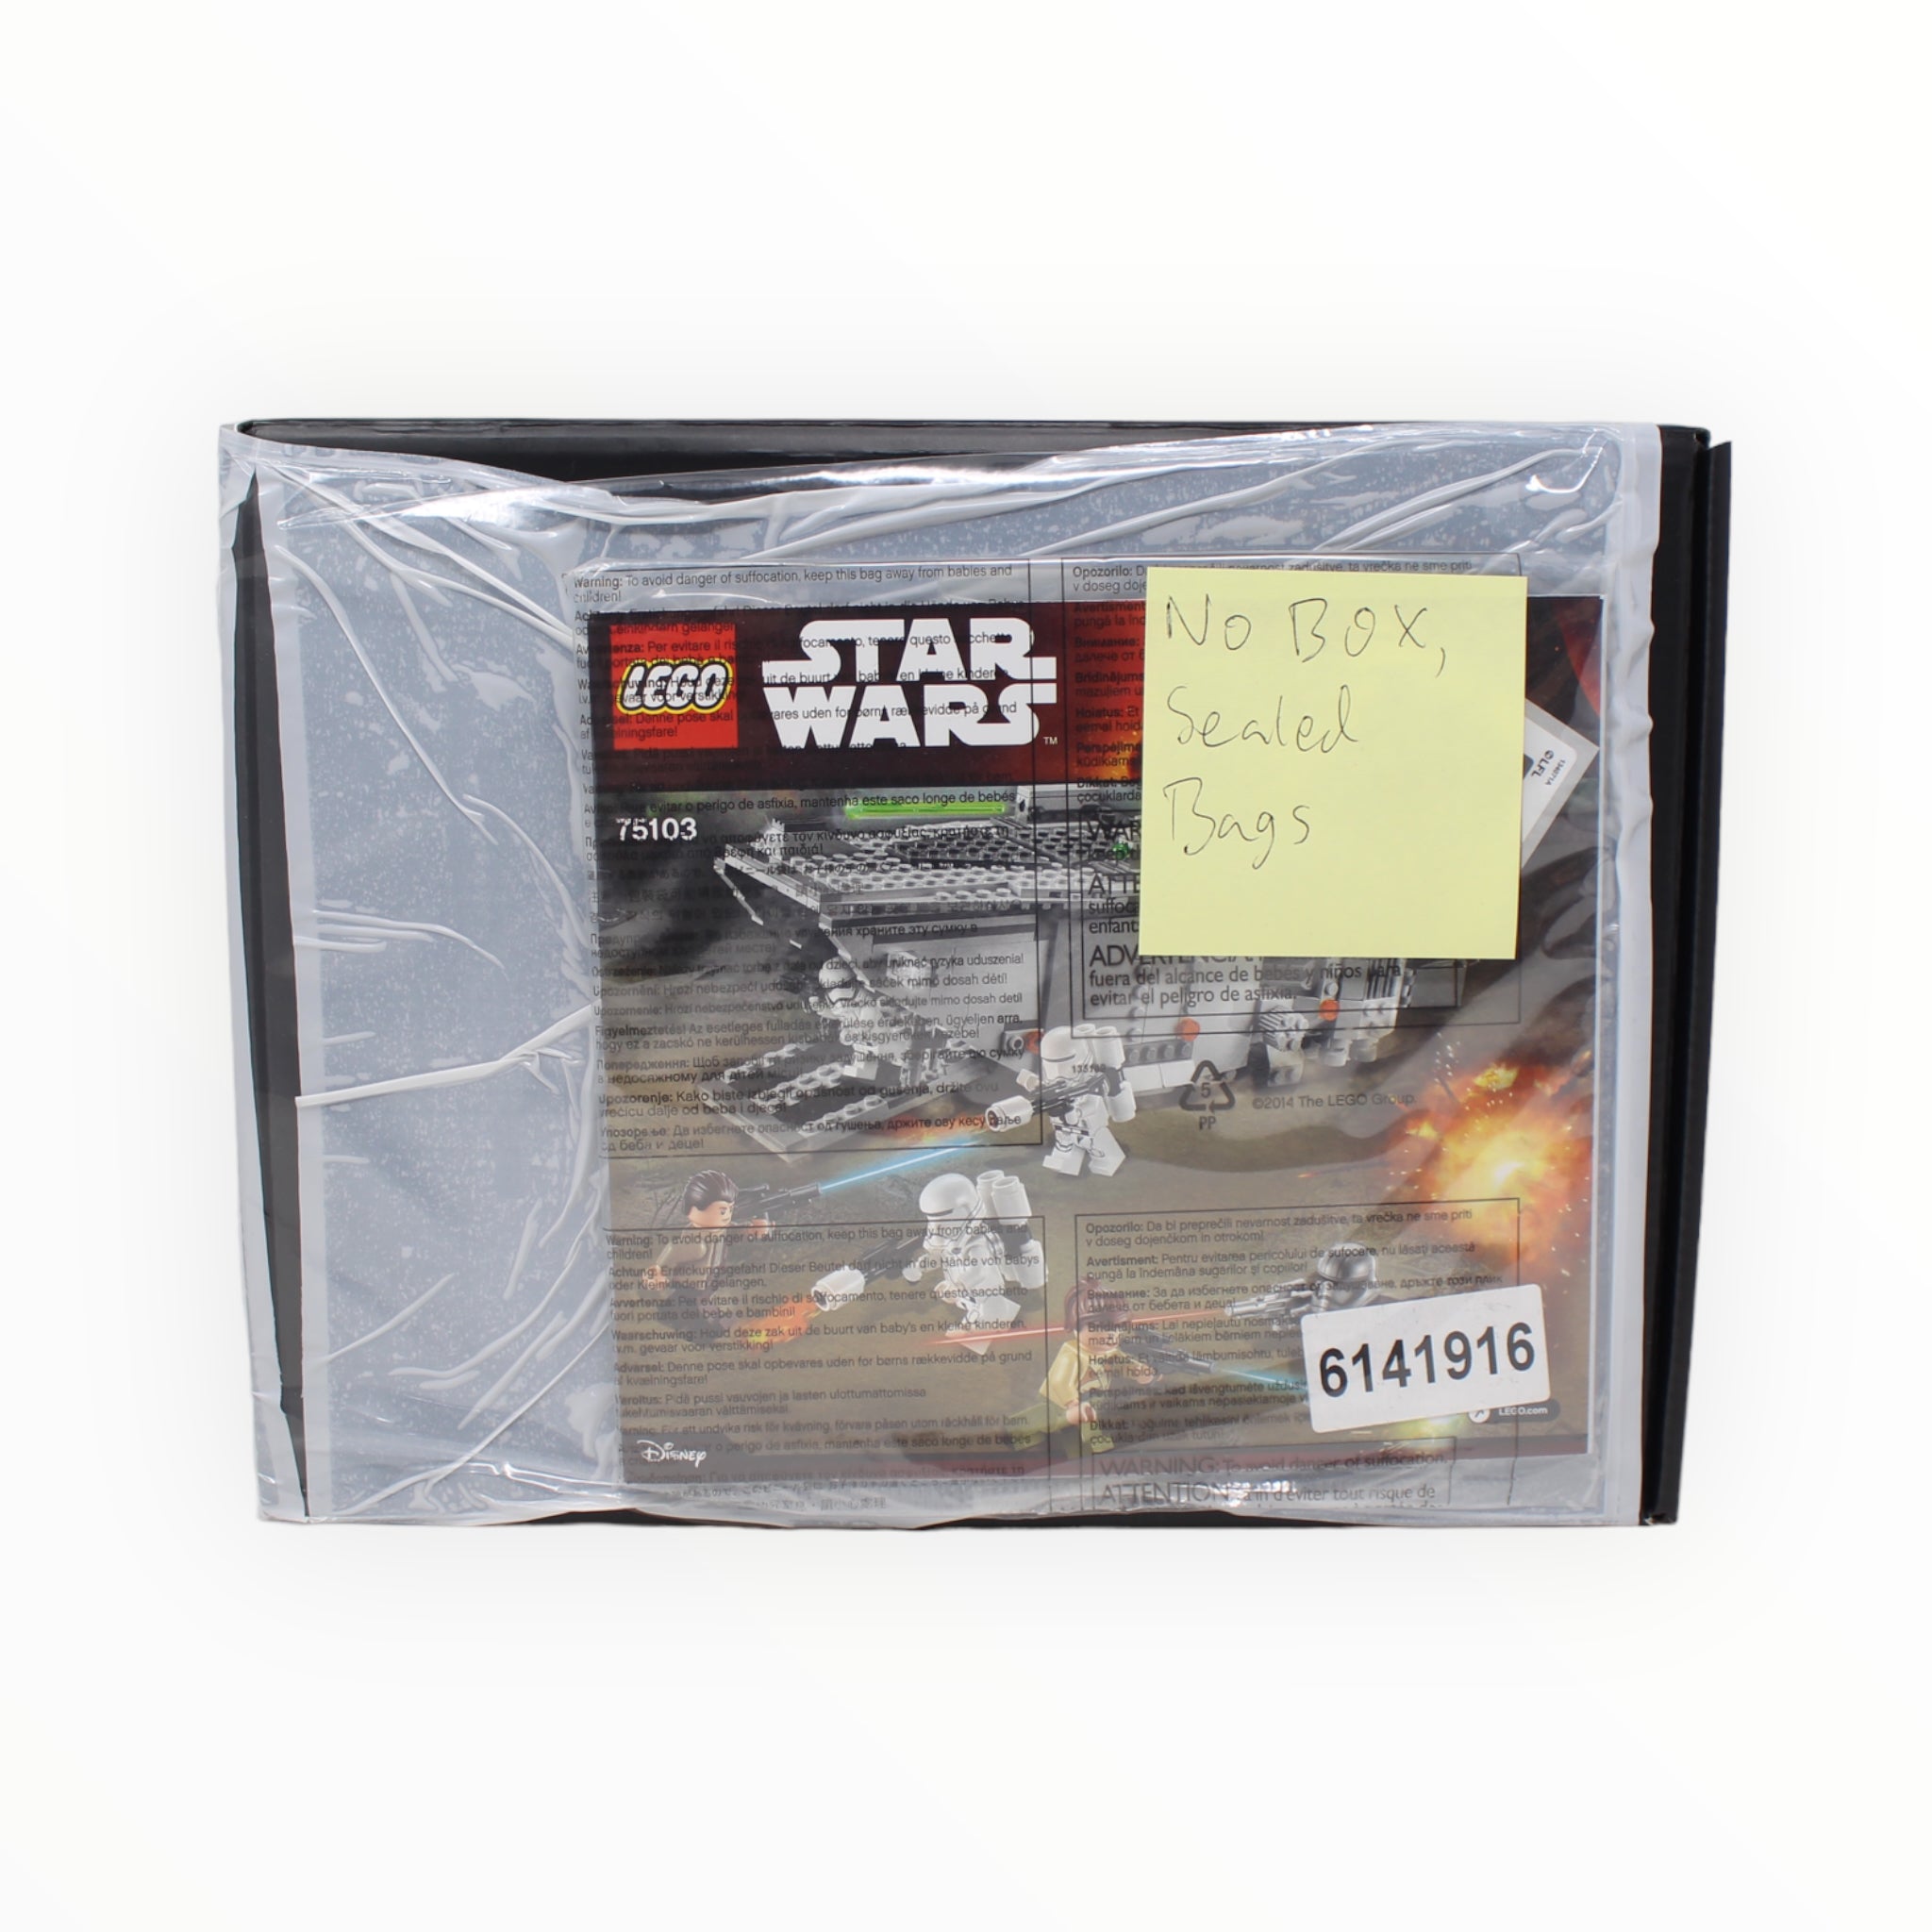 span Terapi sortere Certified Used Set 75103 Star Wars First Order Transporter (no box, se